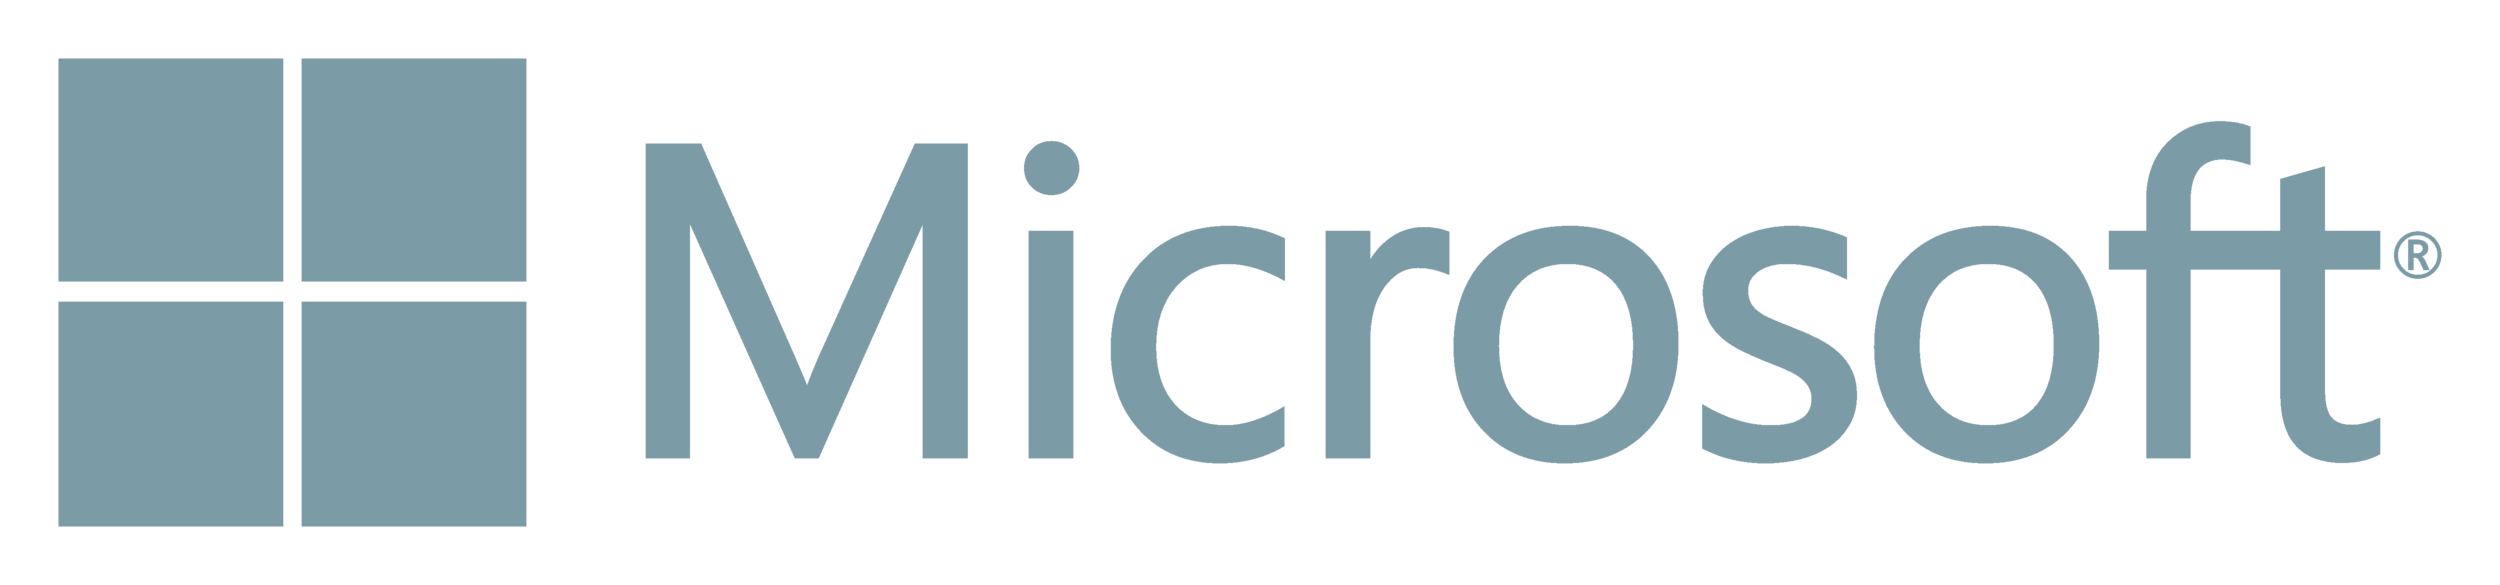 Microsoft logo color.png